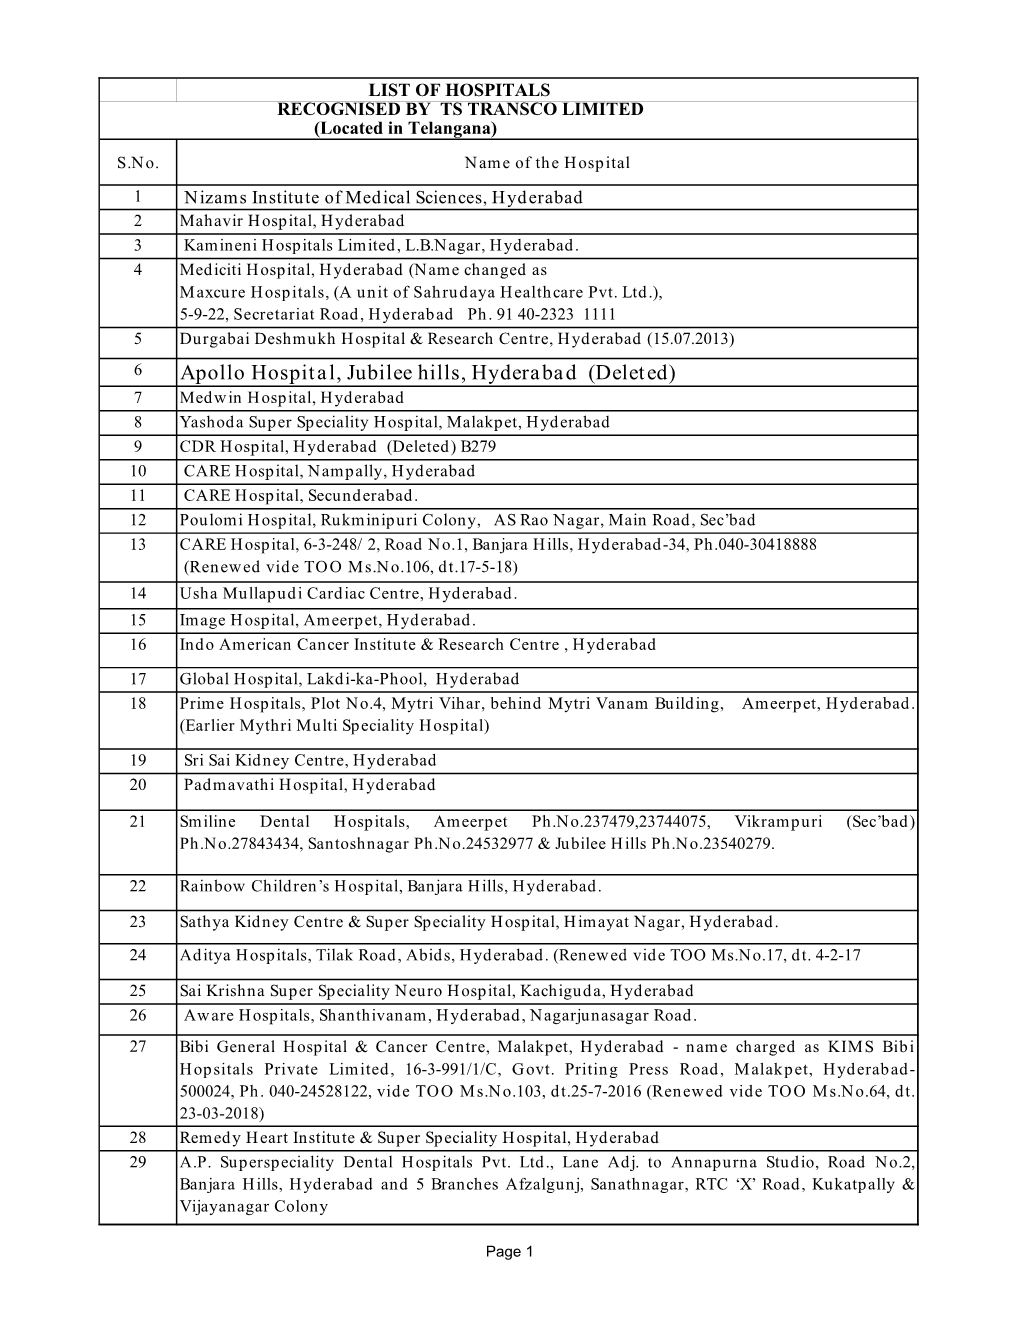 Telangana List of Hospitals